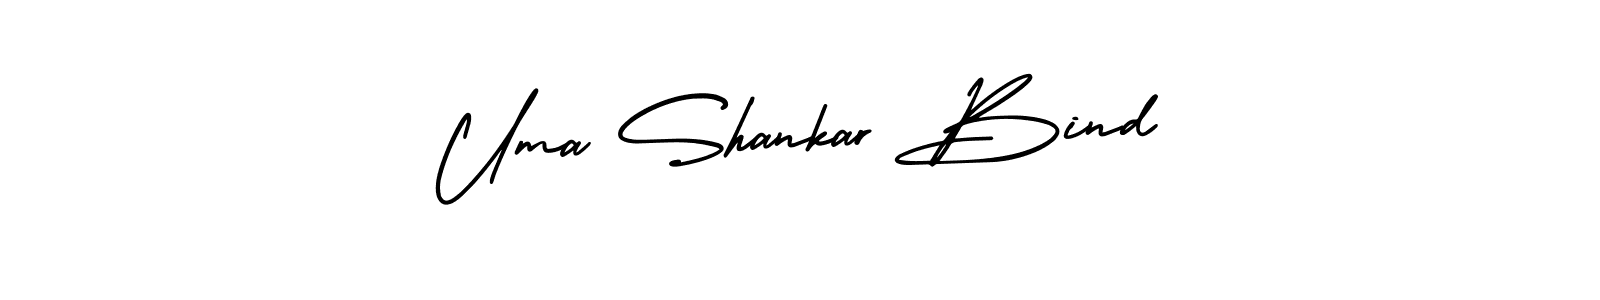 Design your own signature with our free online signature maker. With this signature software, you can create a handwritten (AmerikaSignatureDemo-Regular) signature for name Uma Shankar Bind. Uma Shankar Bind signature style 3 images and pictures png